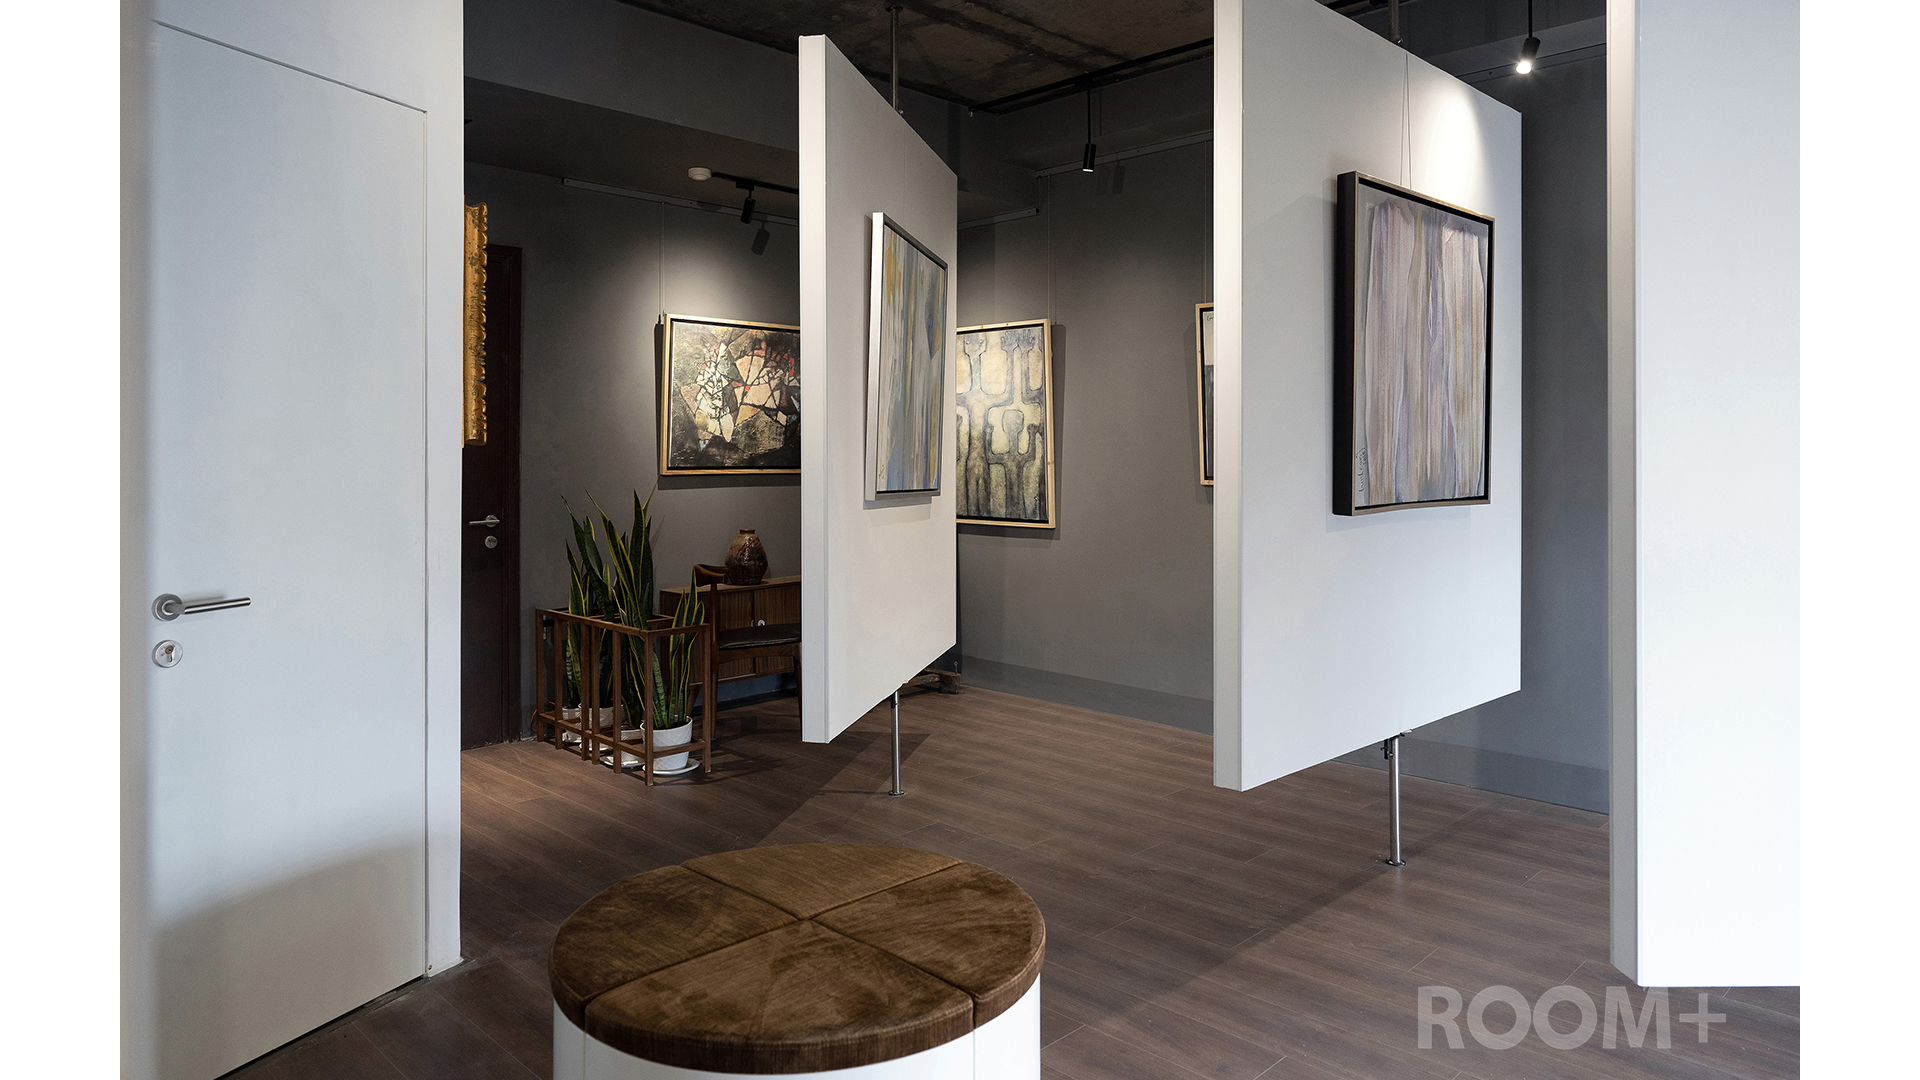 ROOM+ Trịnh Cung Gallery - Studio (6)